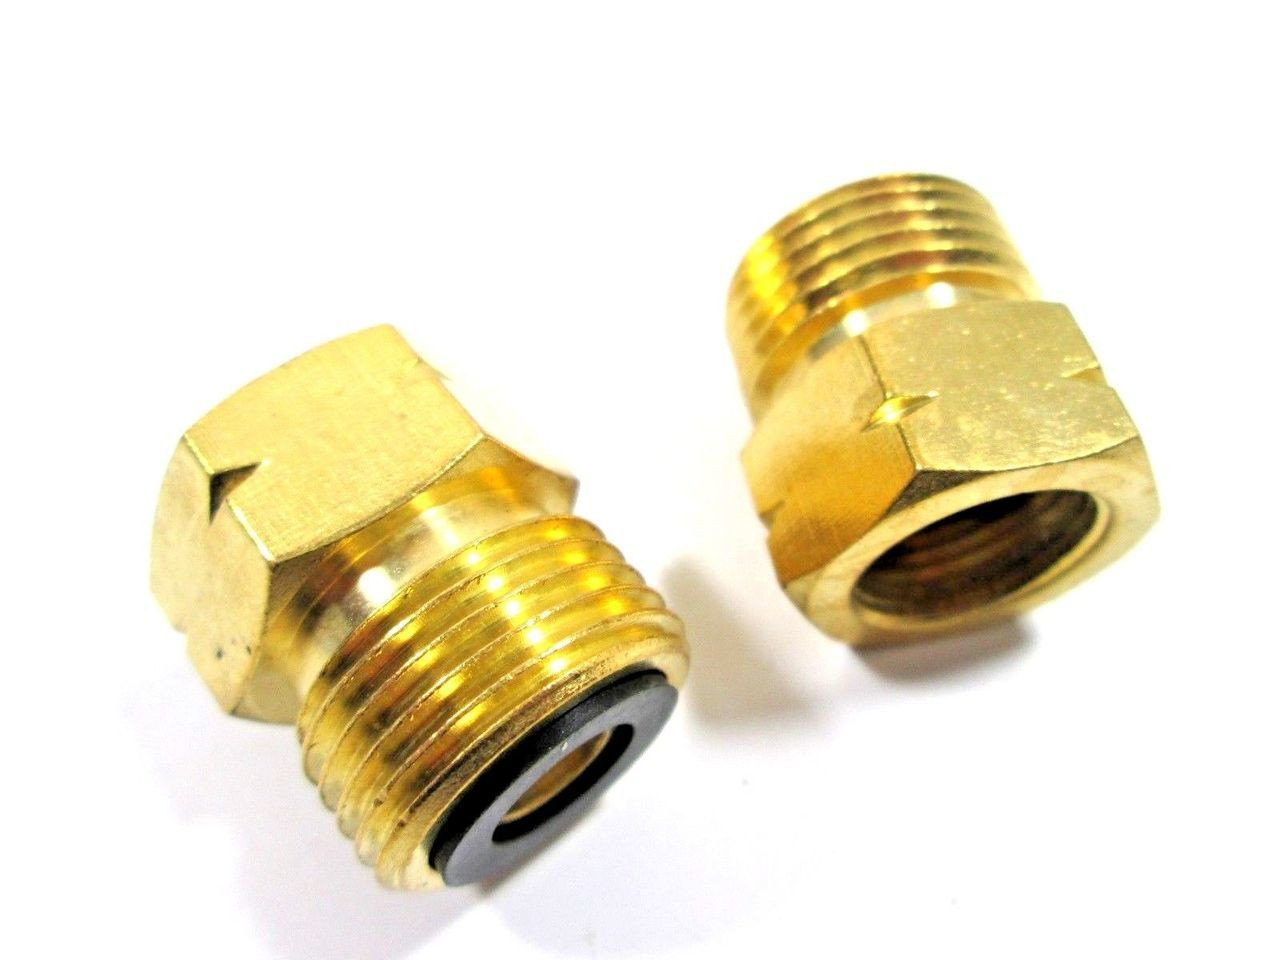 Gas Hose Adapter 21.8-14 To G 3/8-19 Regulator Bottle Pipe Burners Brass Thread